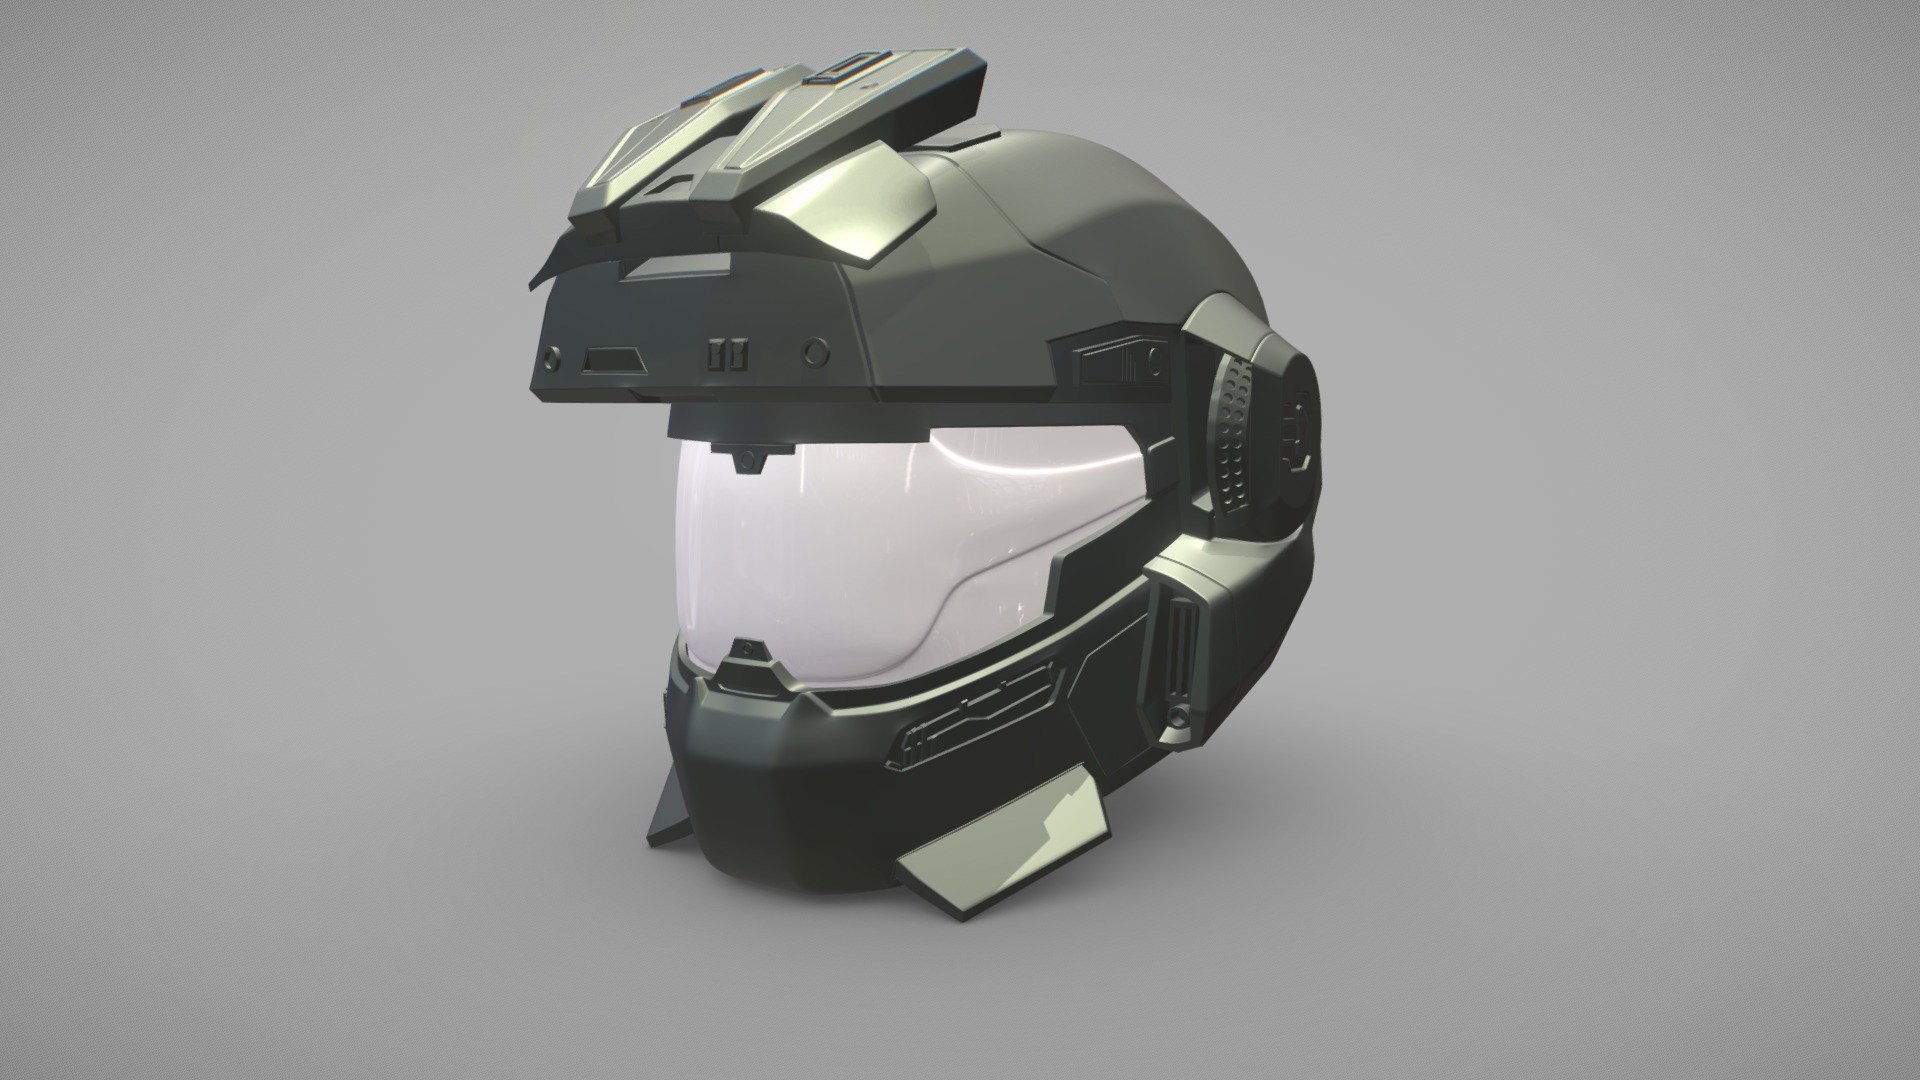 Jorge helment - Halo reach - 3D model by elba270 [460bf5b] - Sketchfab